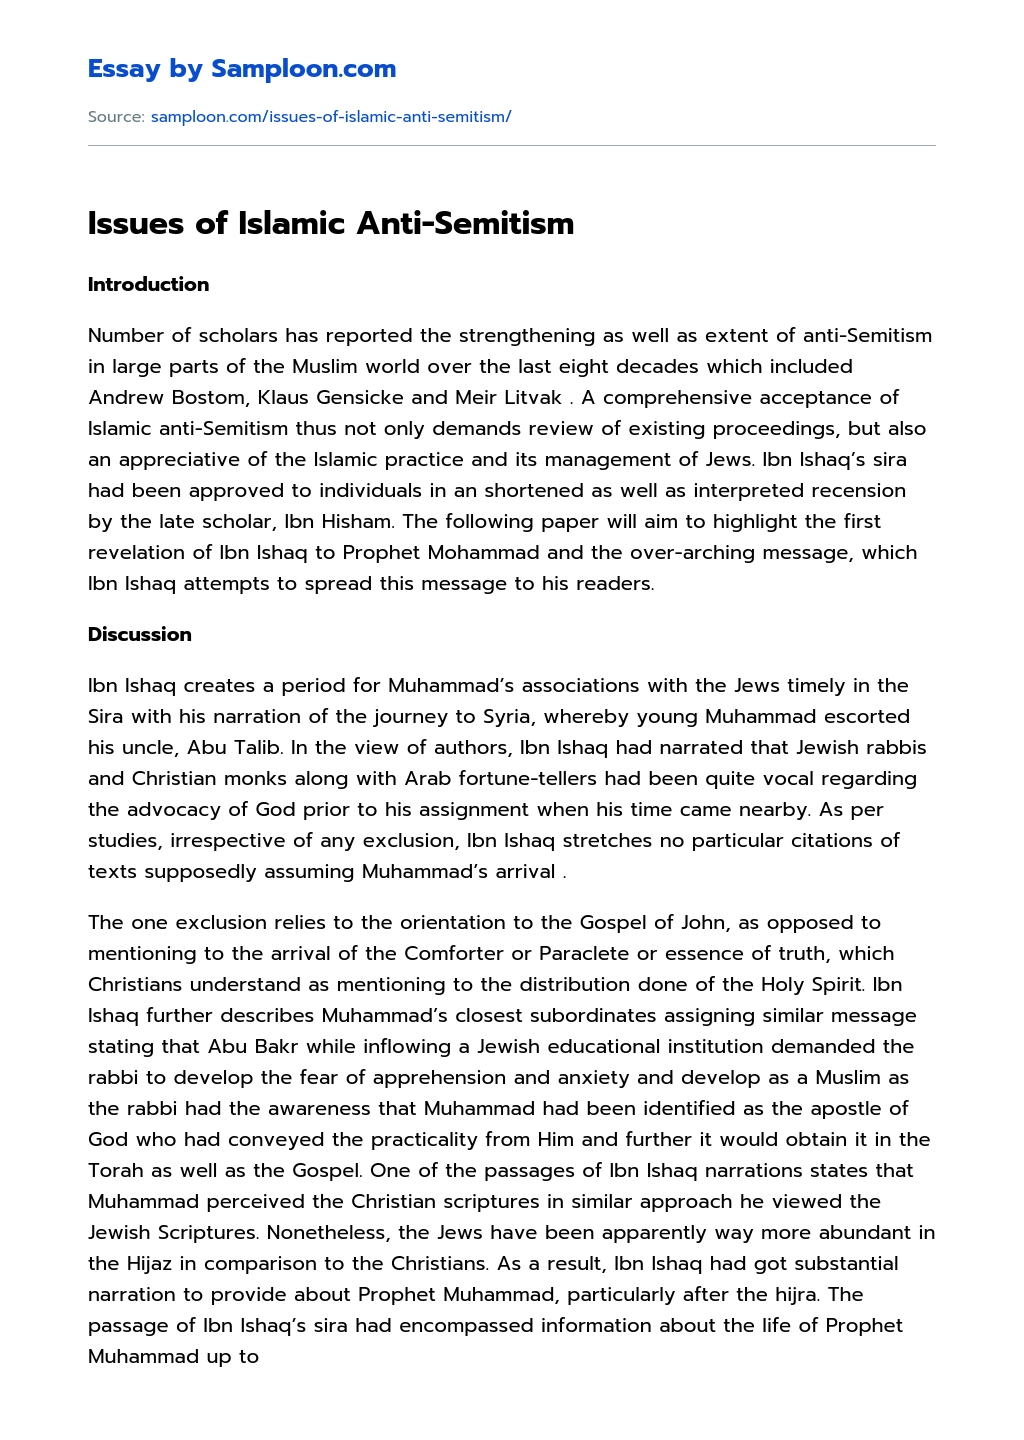 Issues of Islamic Anti-Semitism essay